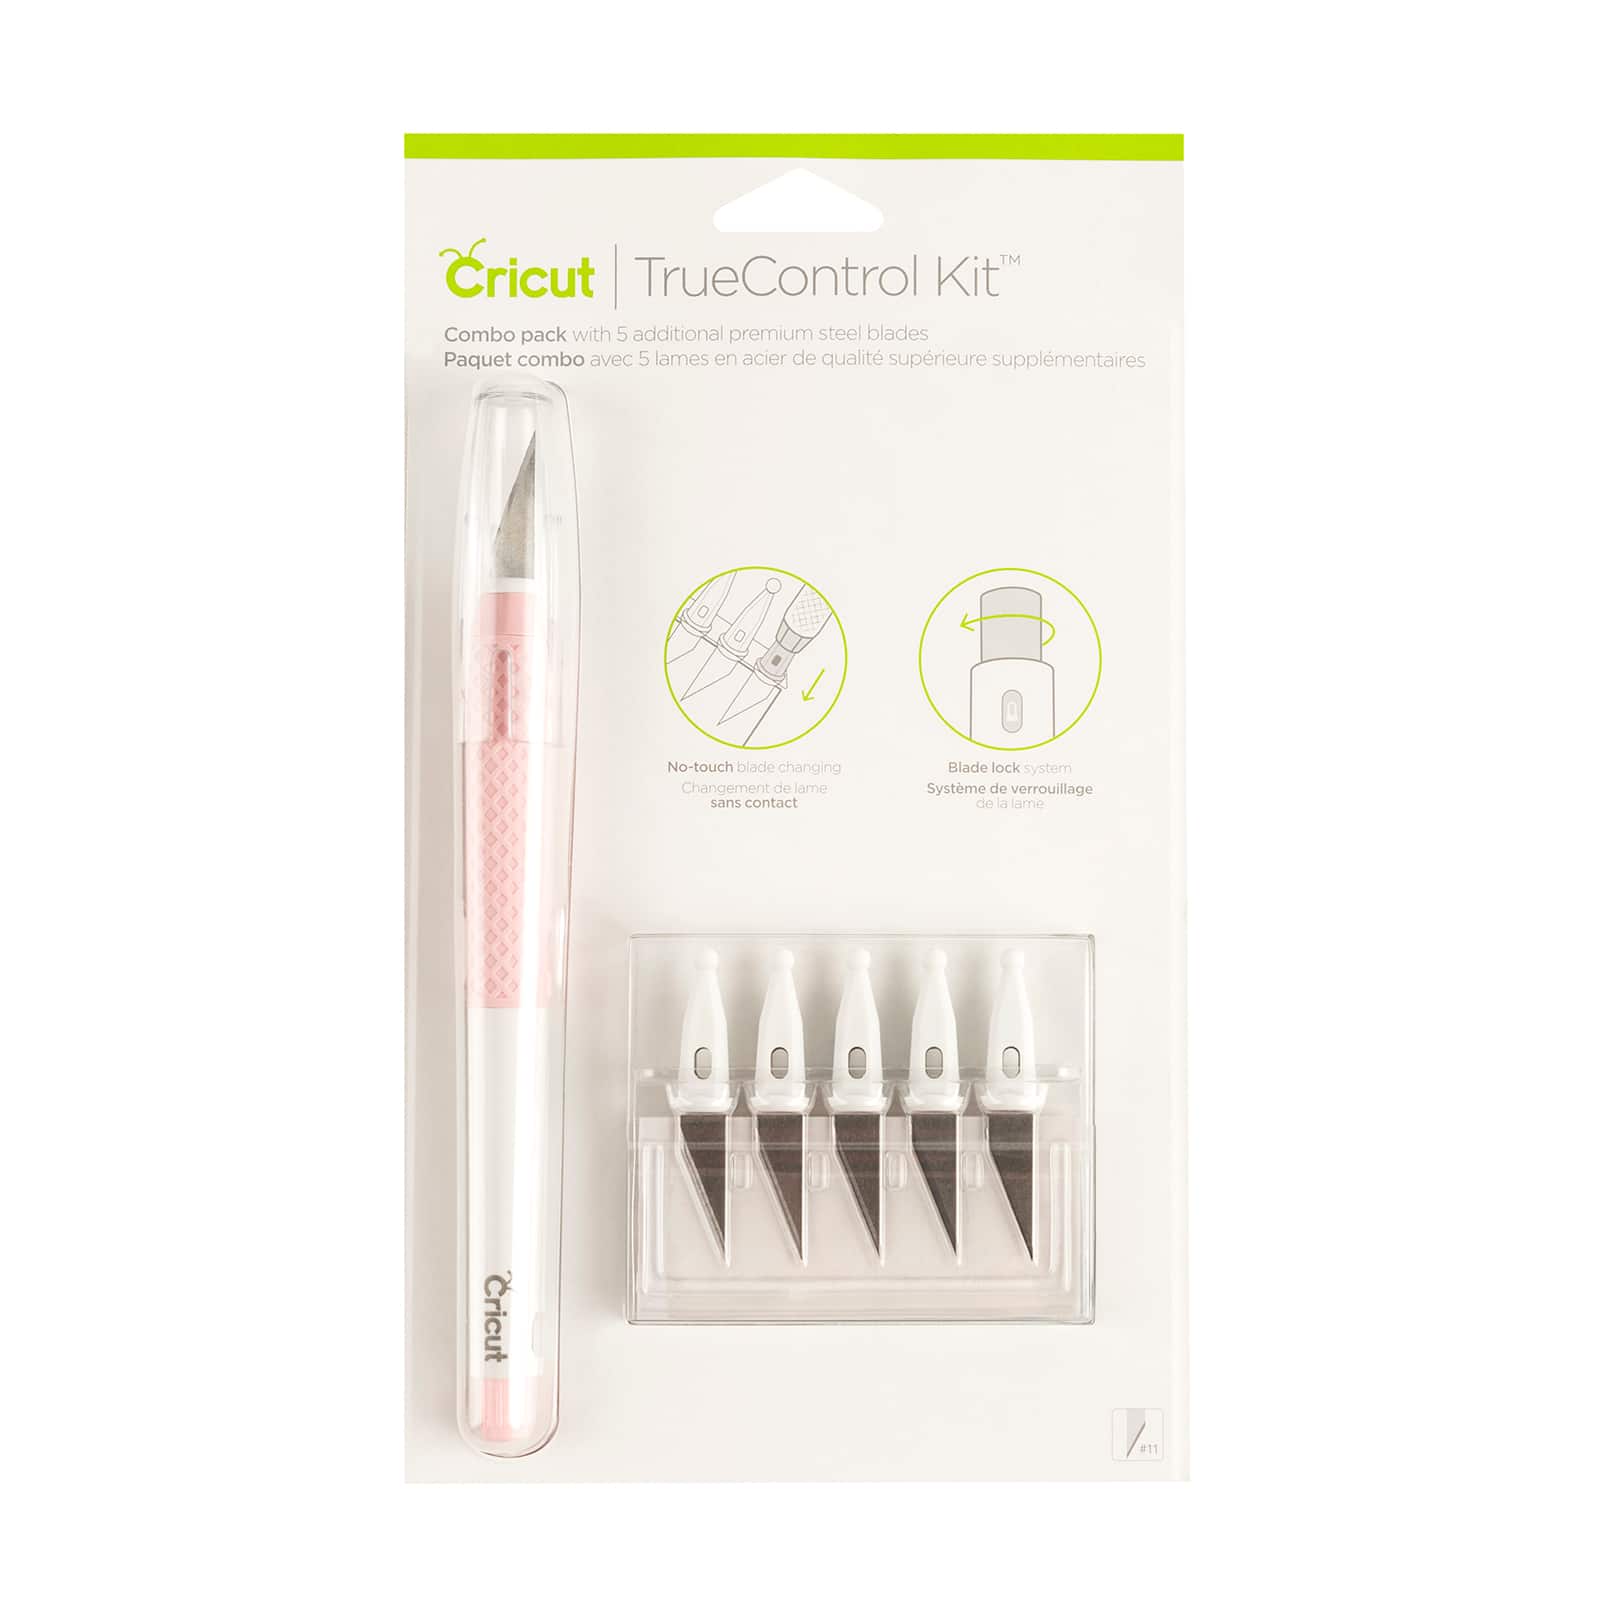 Cricut® Weeding Tool Kit